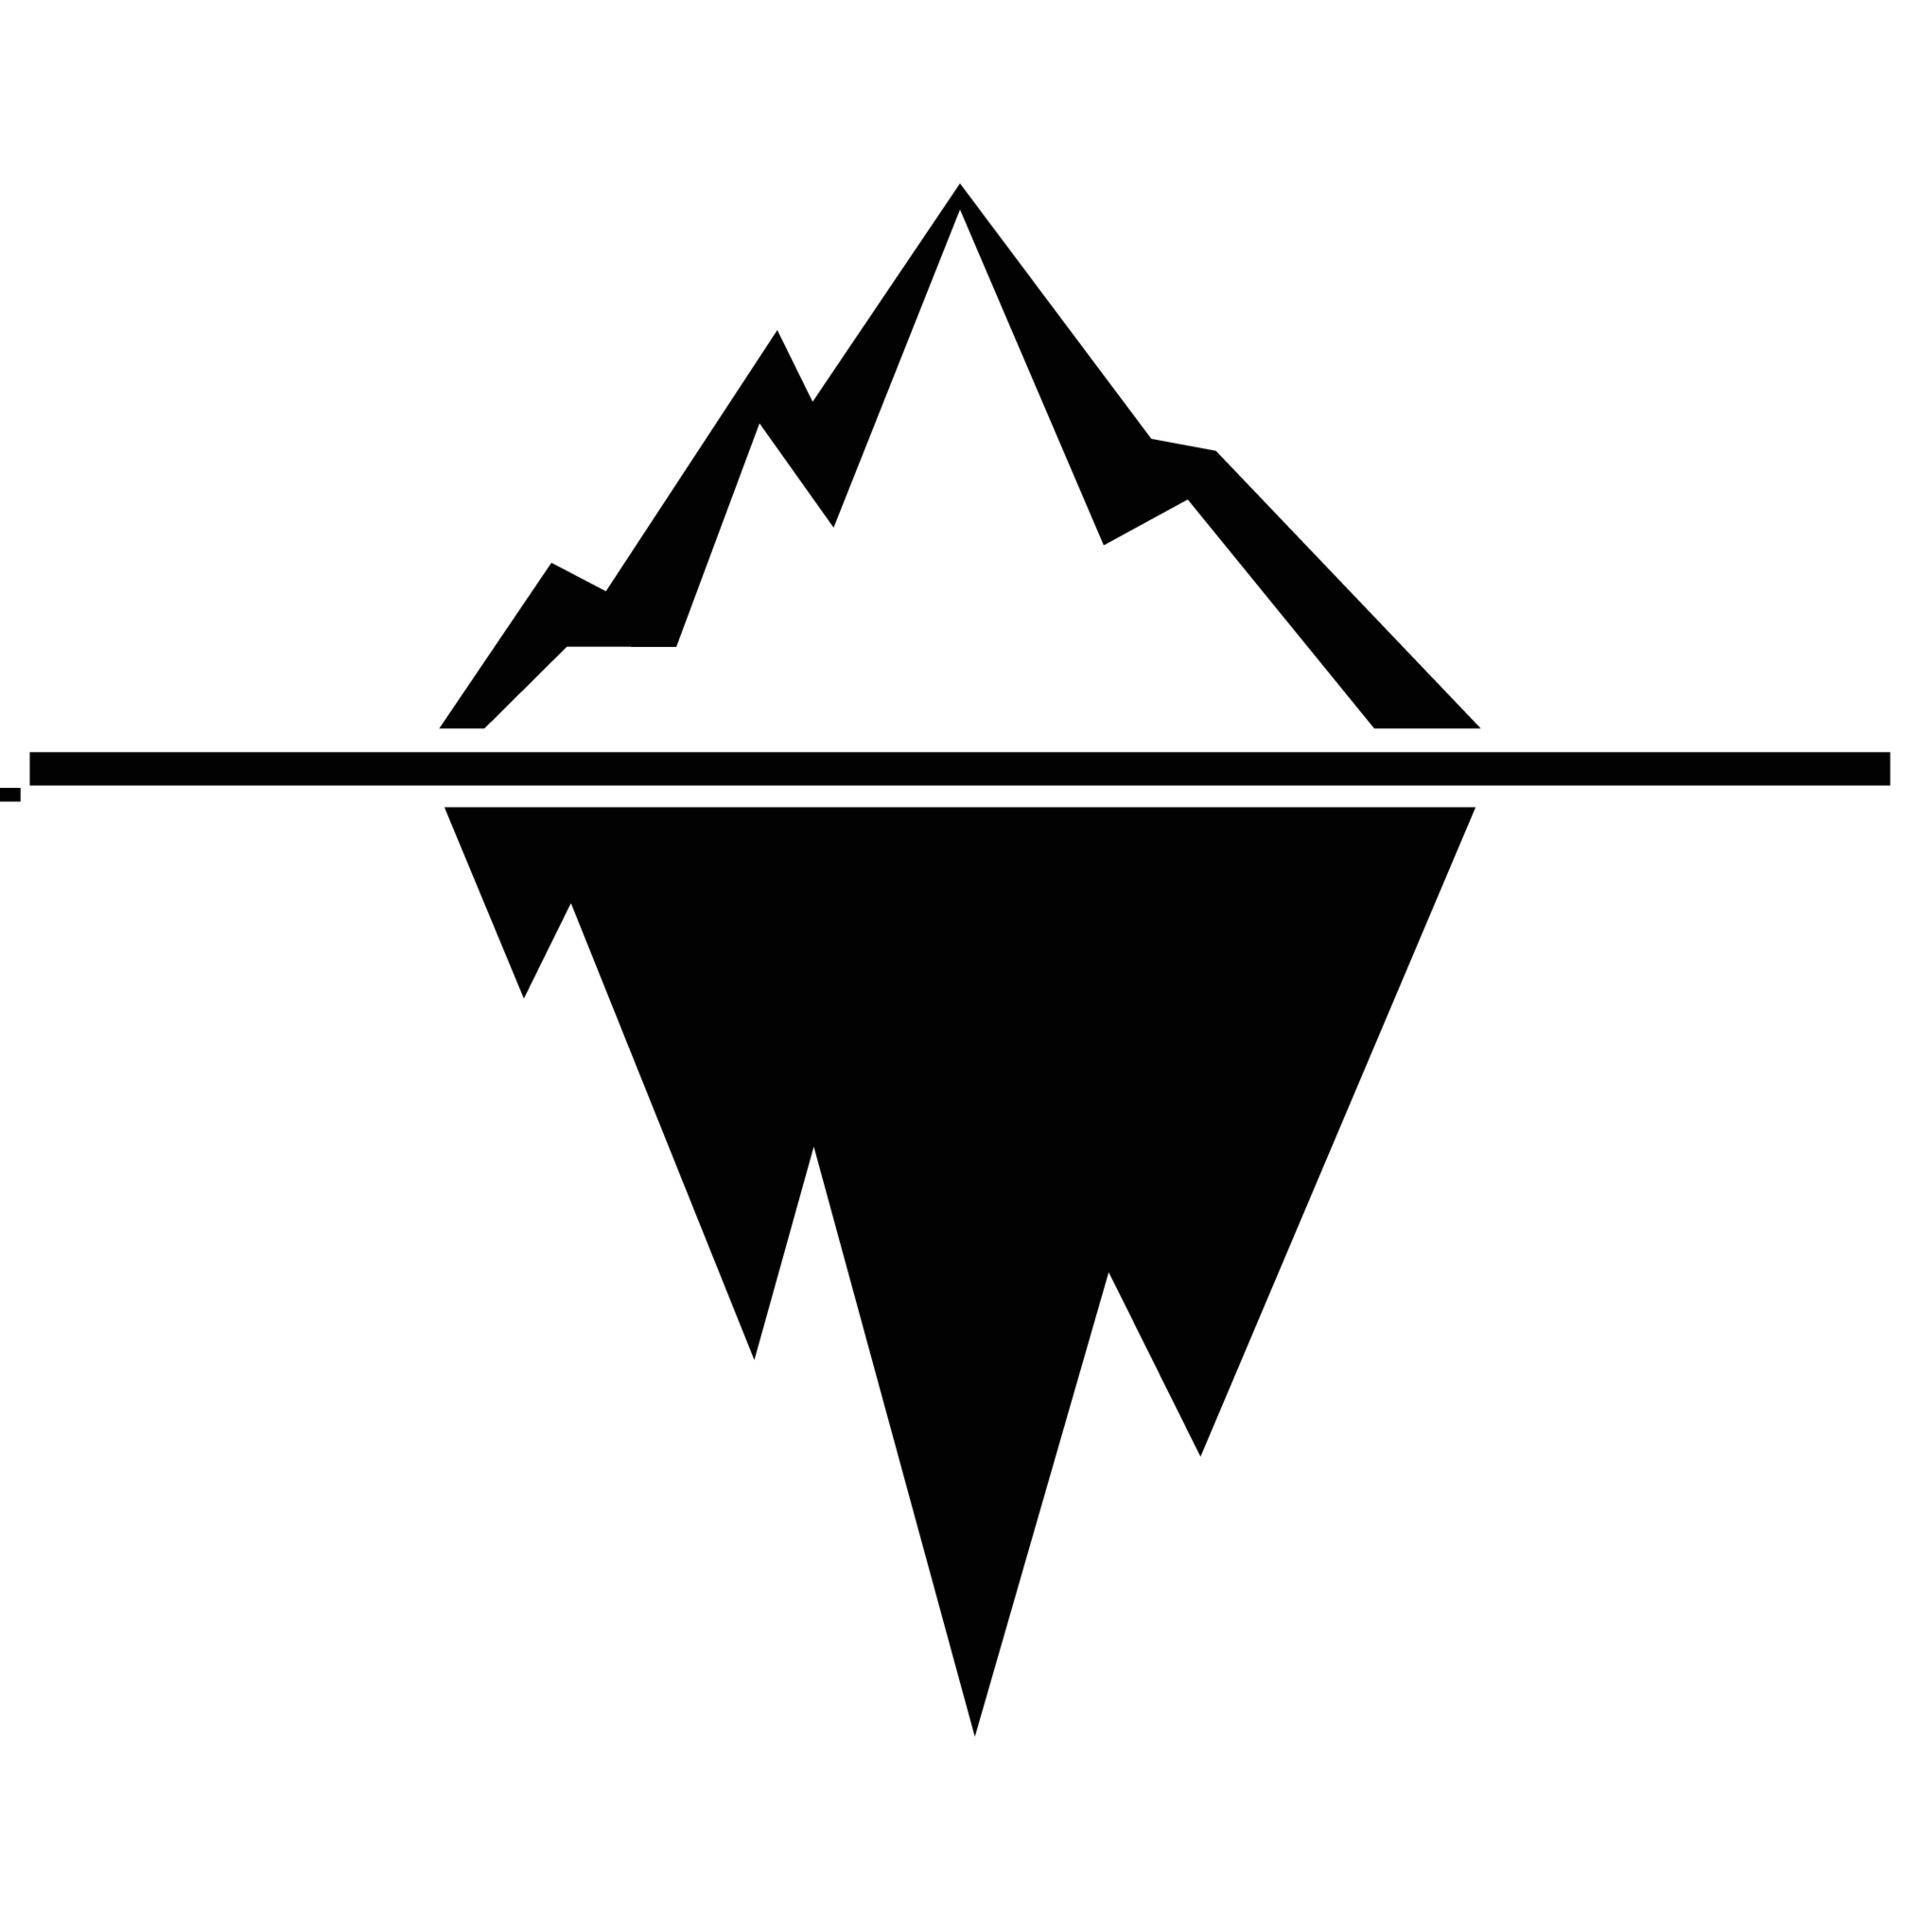 icono de iceberg simple 16830844 Vector en Vecteezy